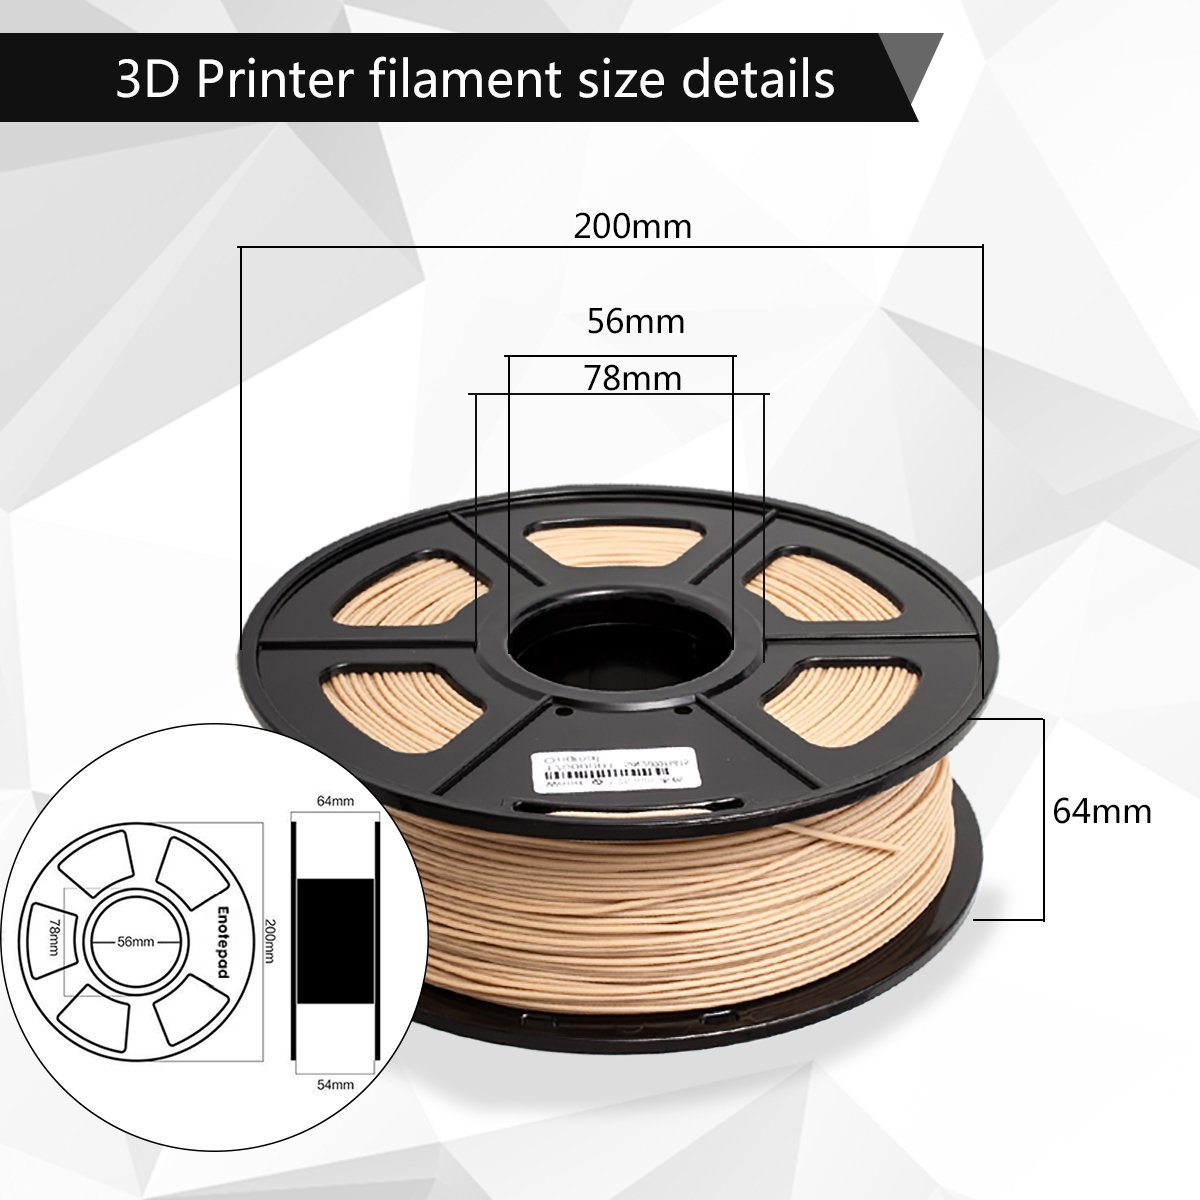 Sunlu PLA Wood Filament 1.75mm 1kg